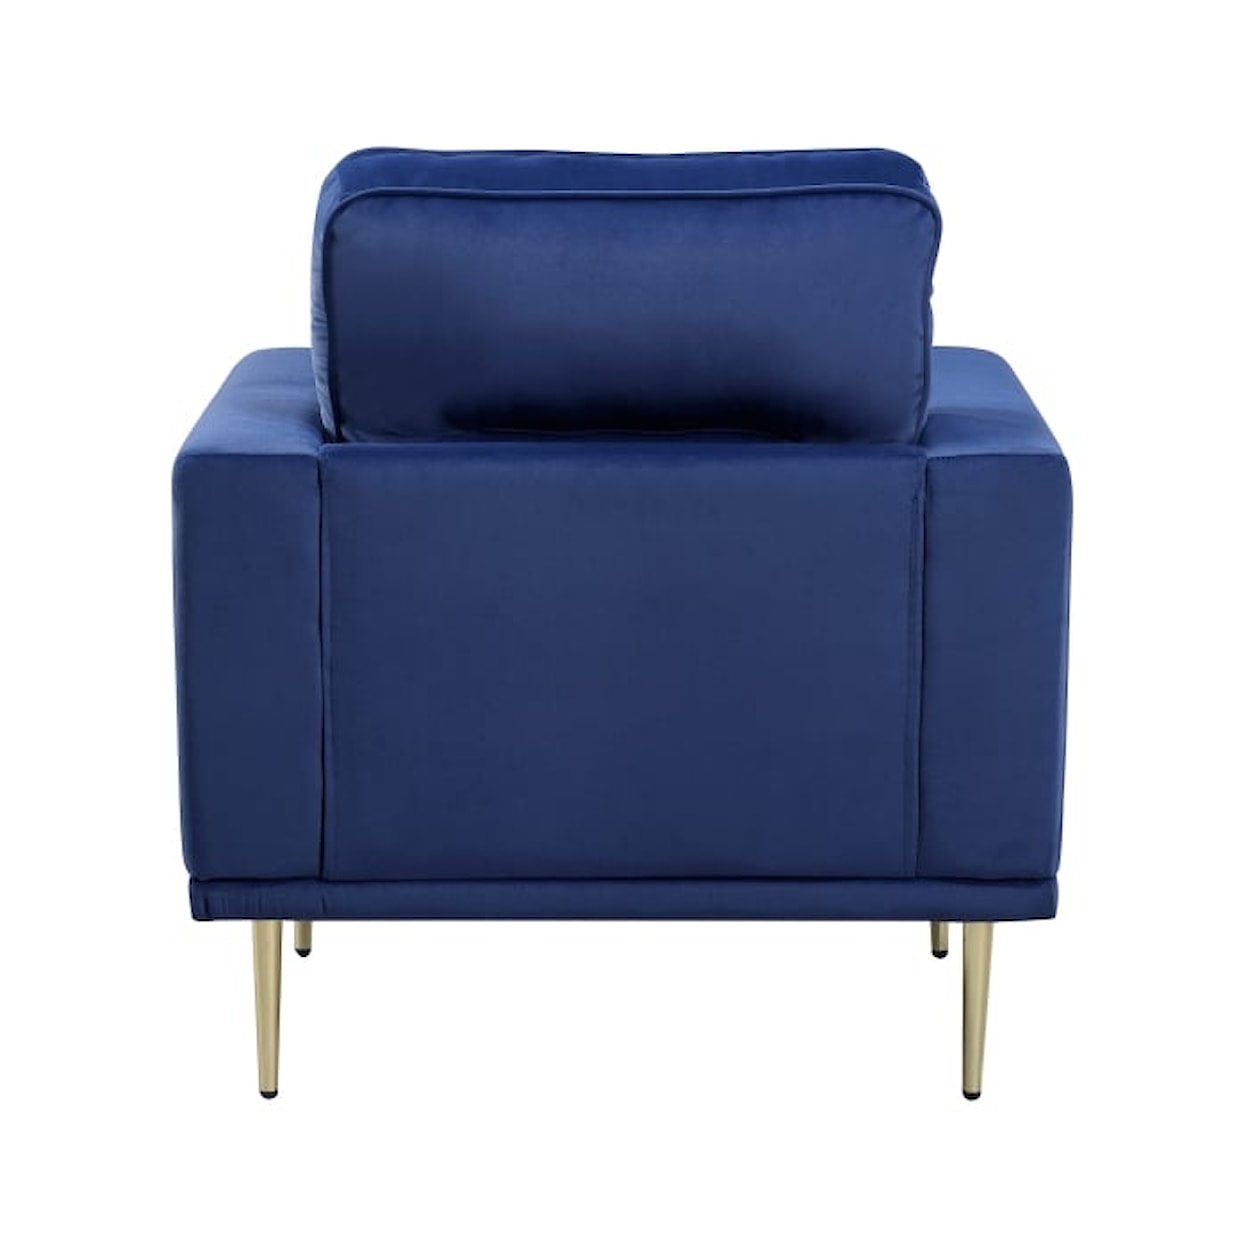 Homelegance Furniture Violetta Accent Chair